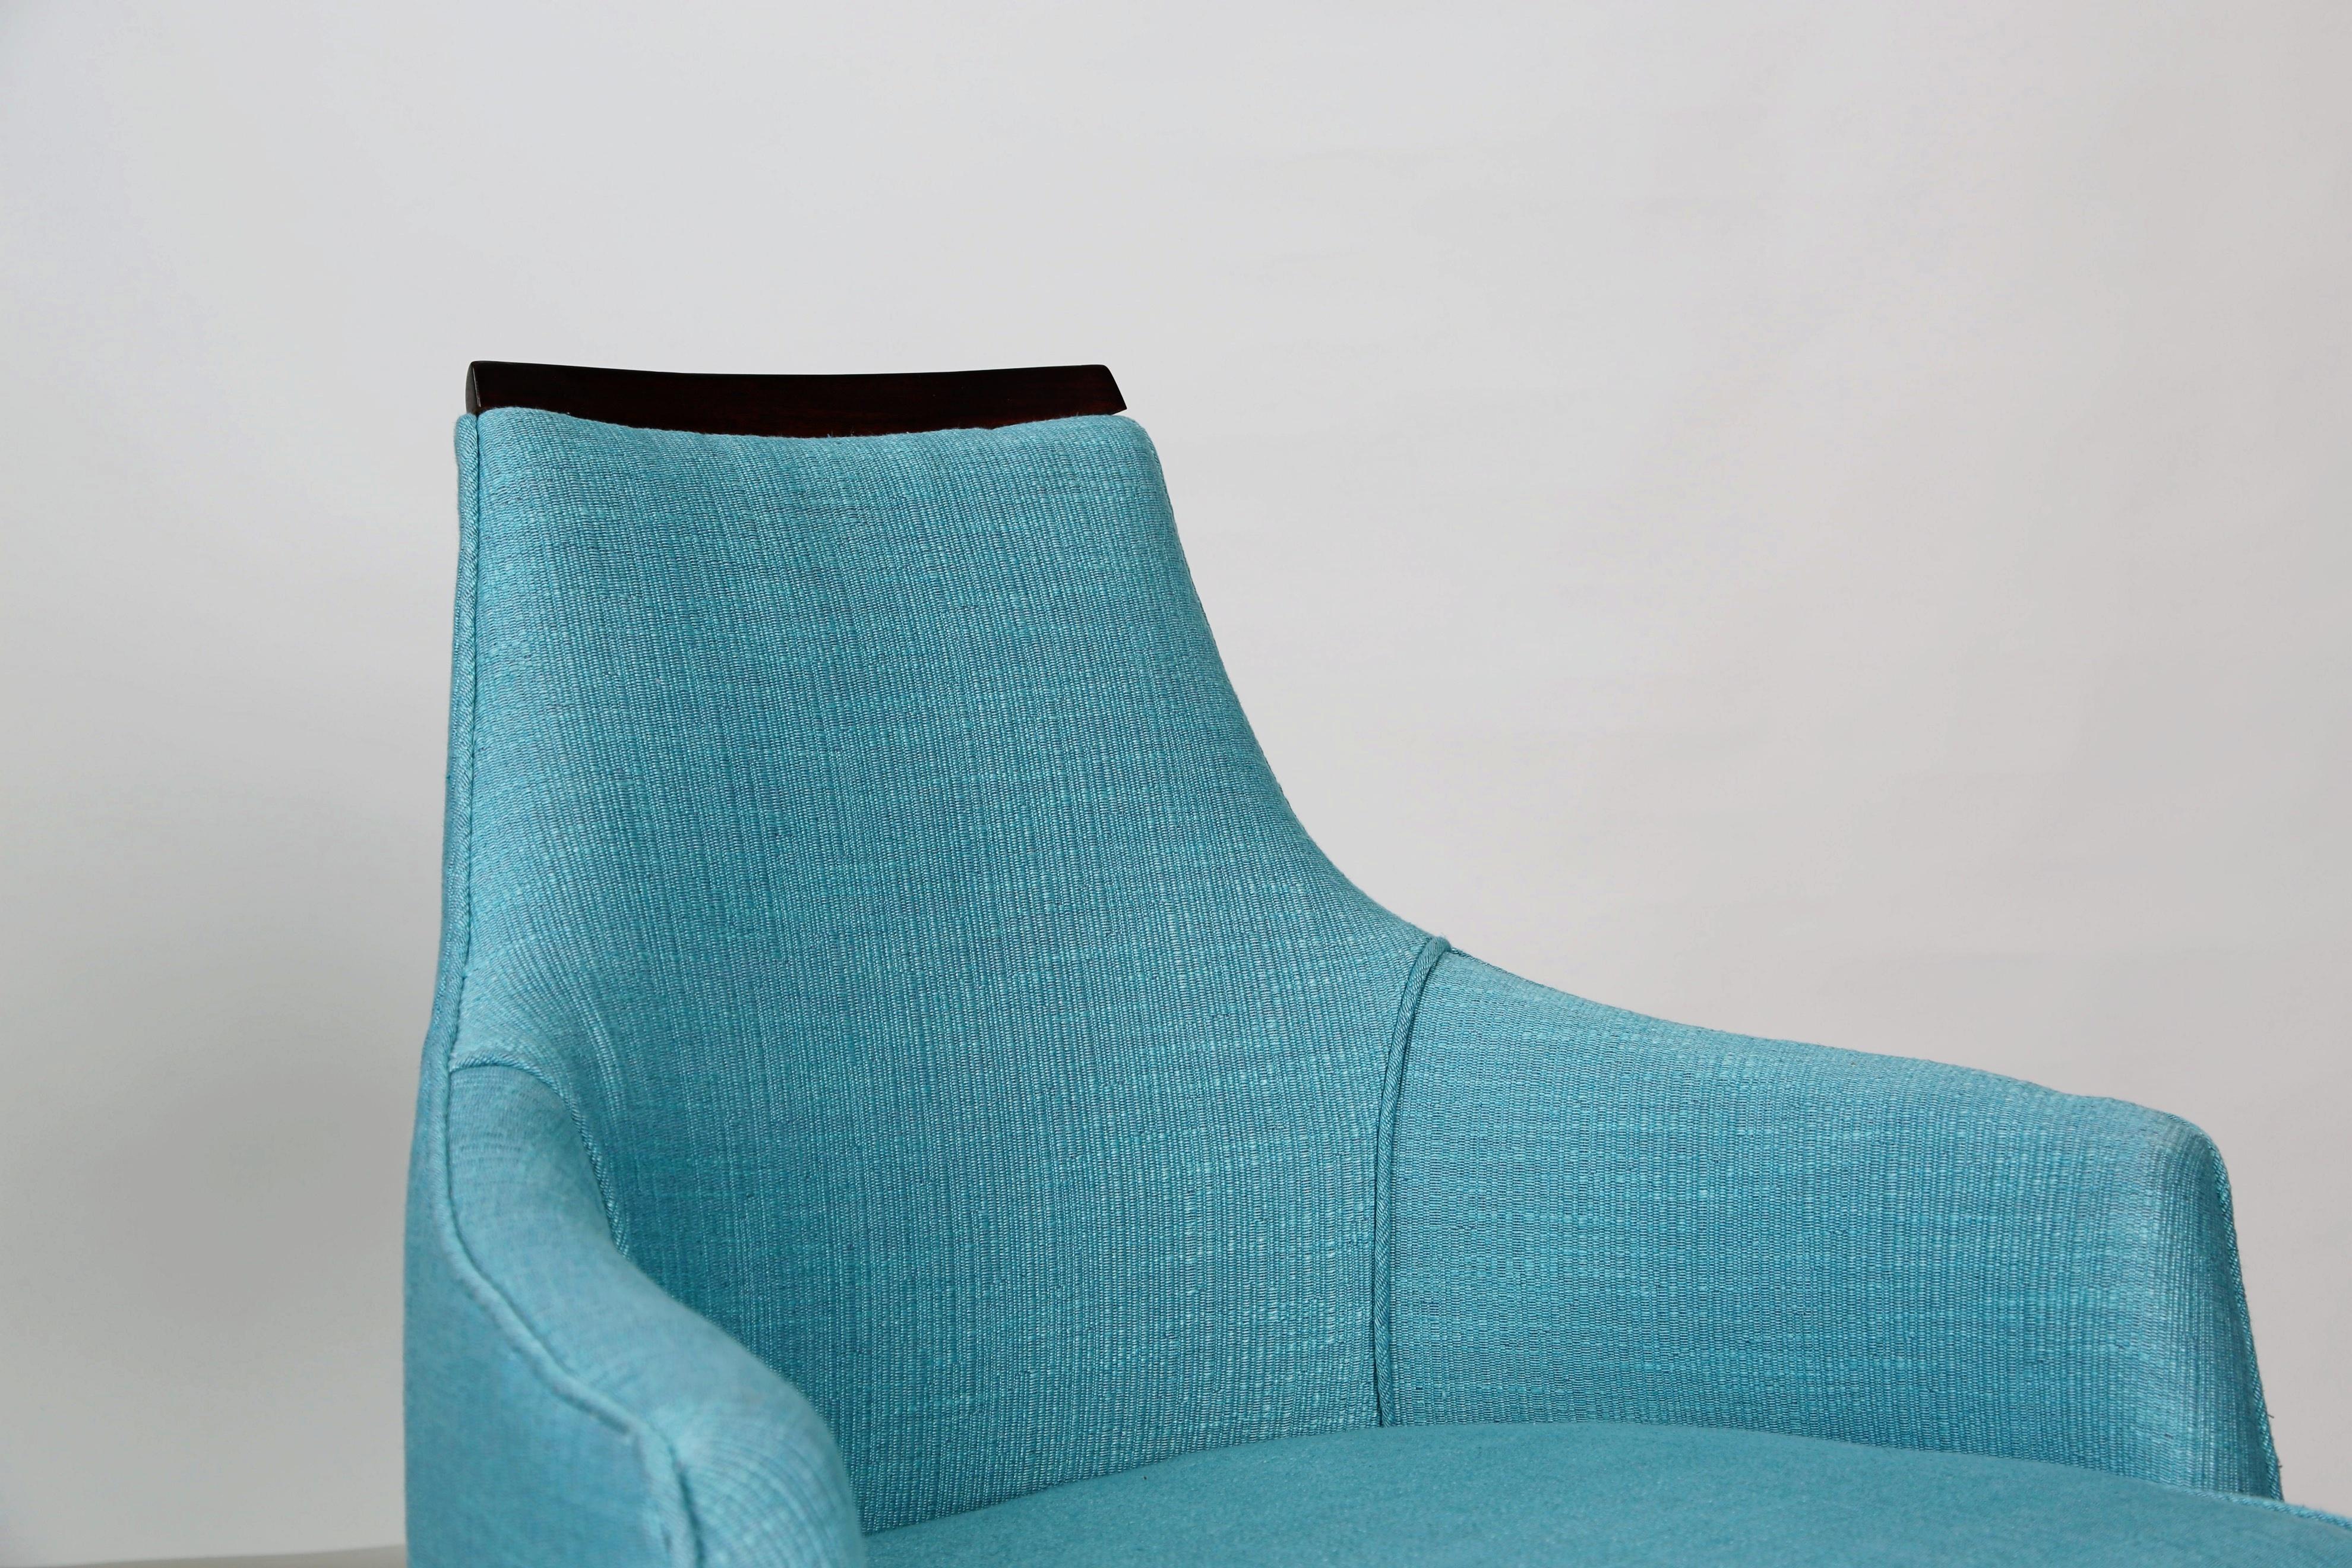 Fabric Kipp Stewart for Calvin Furniture Armchairs, Pair, circa 1960, Reupholstered